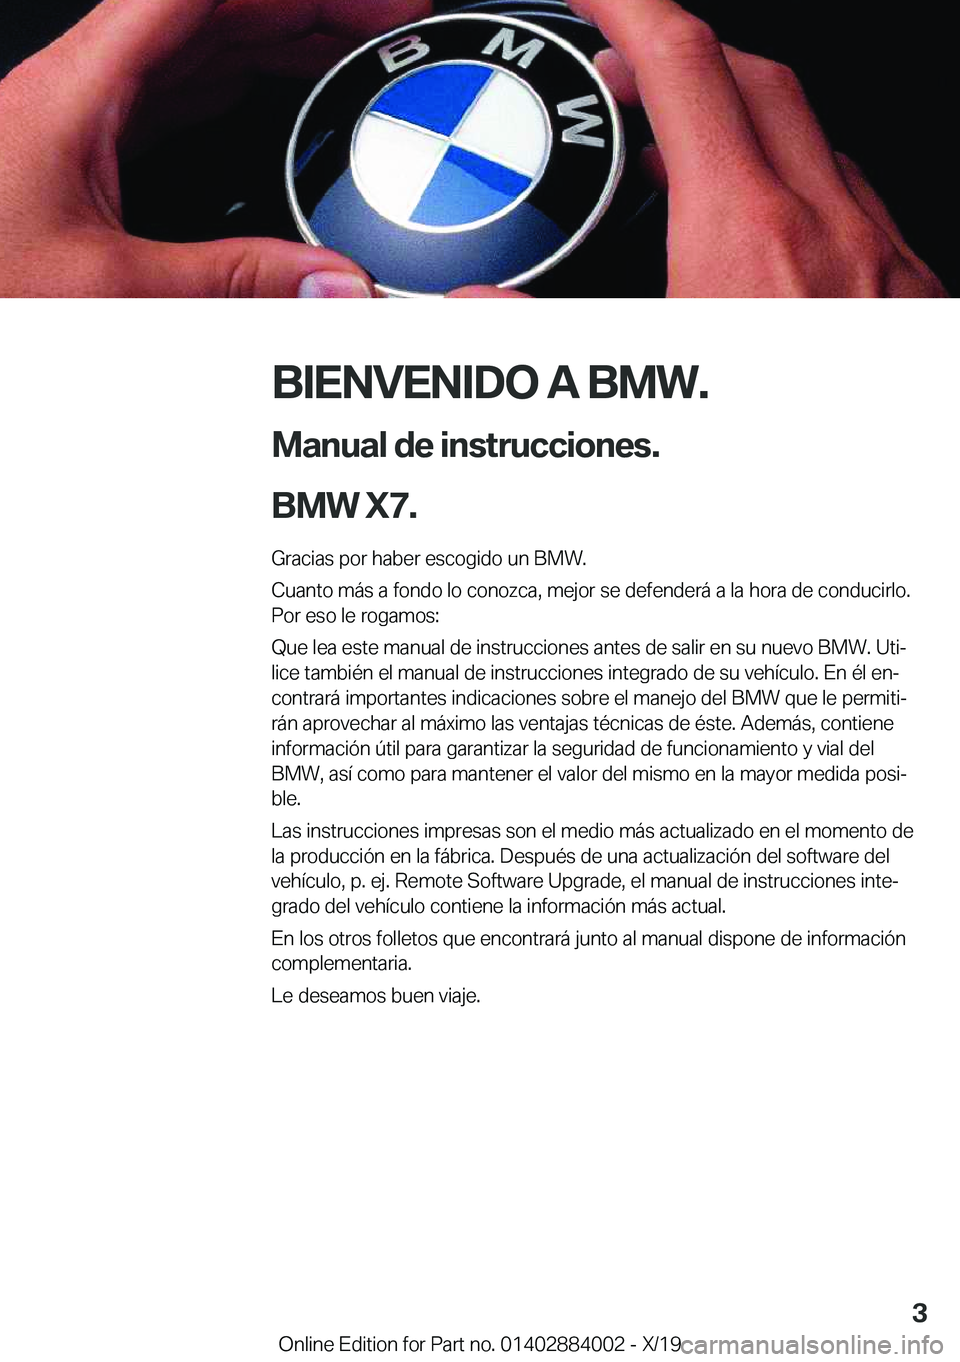 BMW X7 2020  Manuales de Empleo (in Spanish) �B�I�E�N�V�E�N�I�D�O��A��B�M�W�.
�M�a�n�u�a�l��d�e��i�n�s�t�r�u�c�c�i�o�n�e�s�.
�B�M�W��X�7�. �G�r�a�c�i�a�s��p�o�r��h�a�b�e�r��e�s�c�o�g�i�d�o��u�n��B�M�W�.�C�u�a�n�t�o��m�